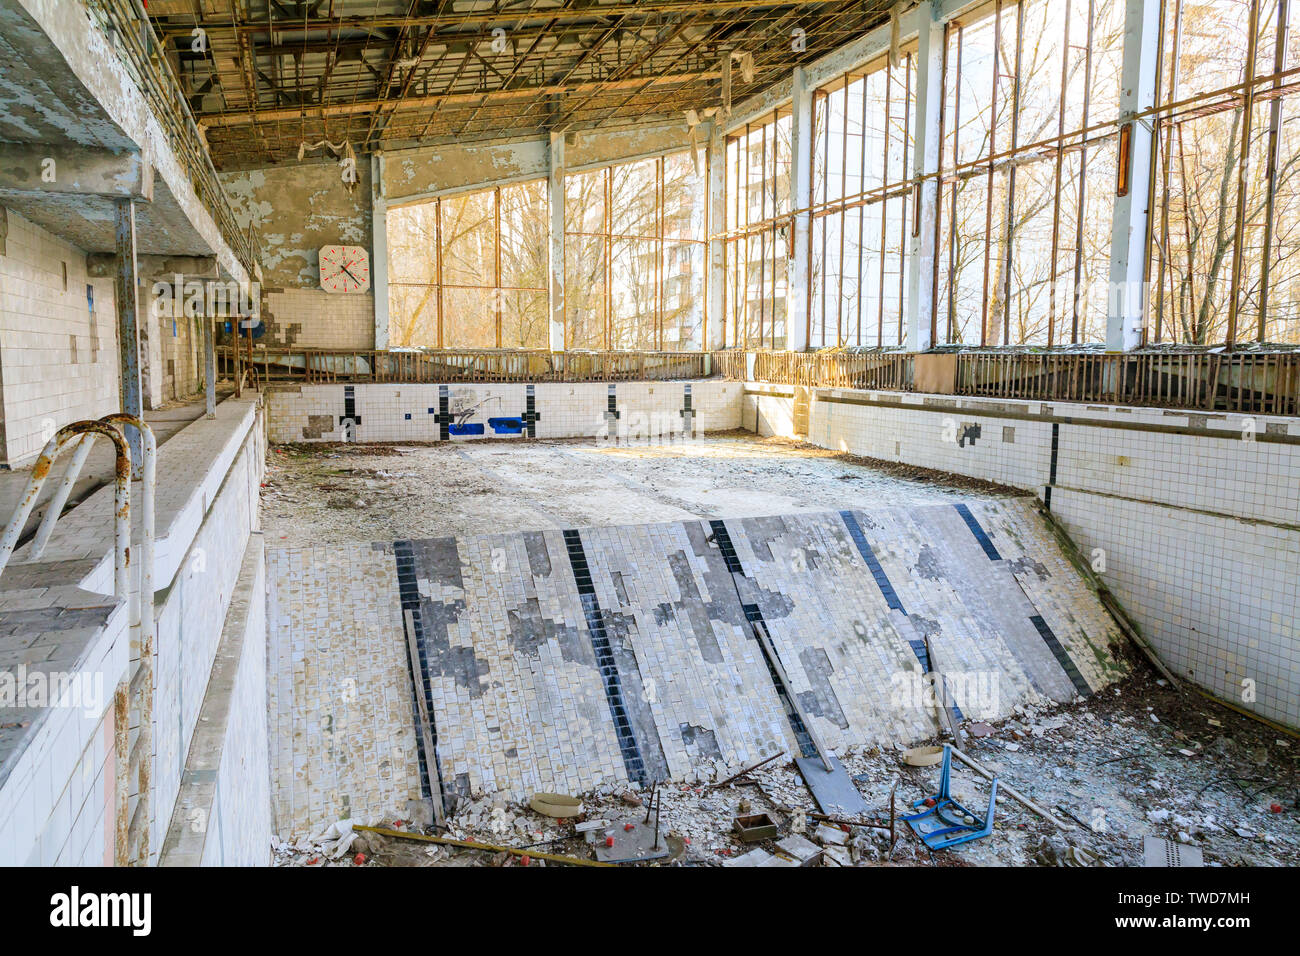 Eastern Europe, Ukraine, Pripyat, Chernobyl. Sport's cour, swimming pool. Stock Photo